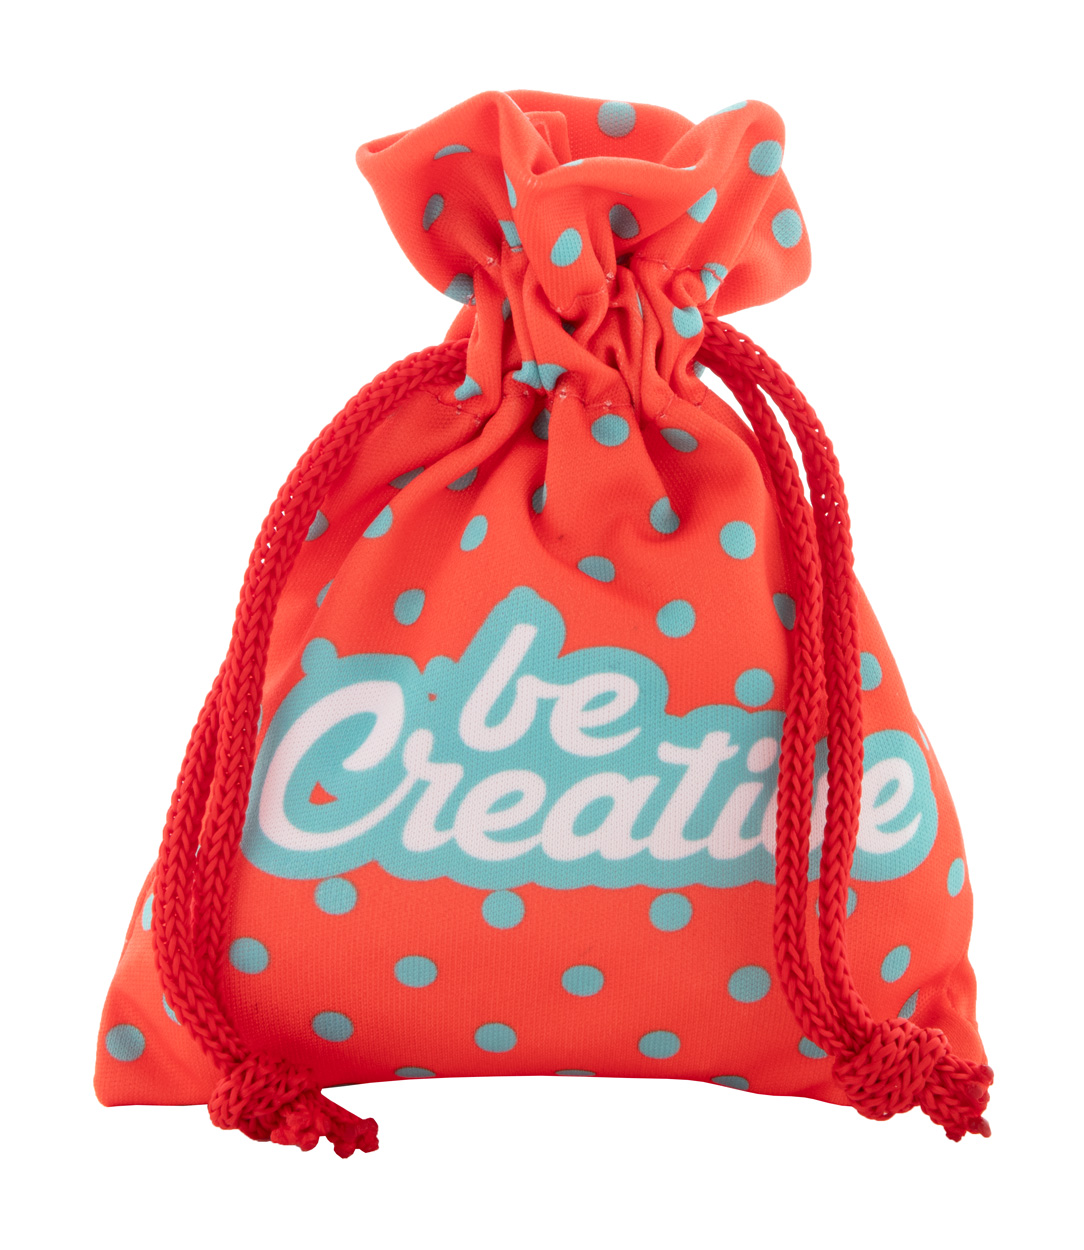 SuboGift S custom gift bag, small - red